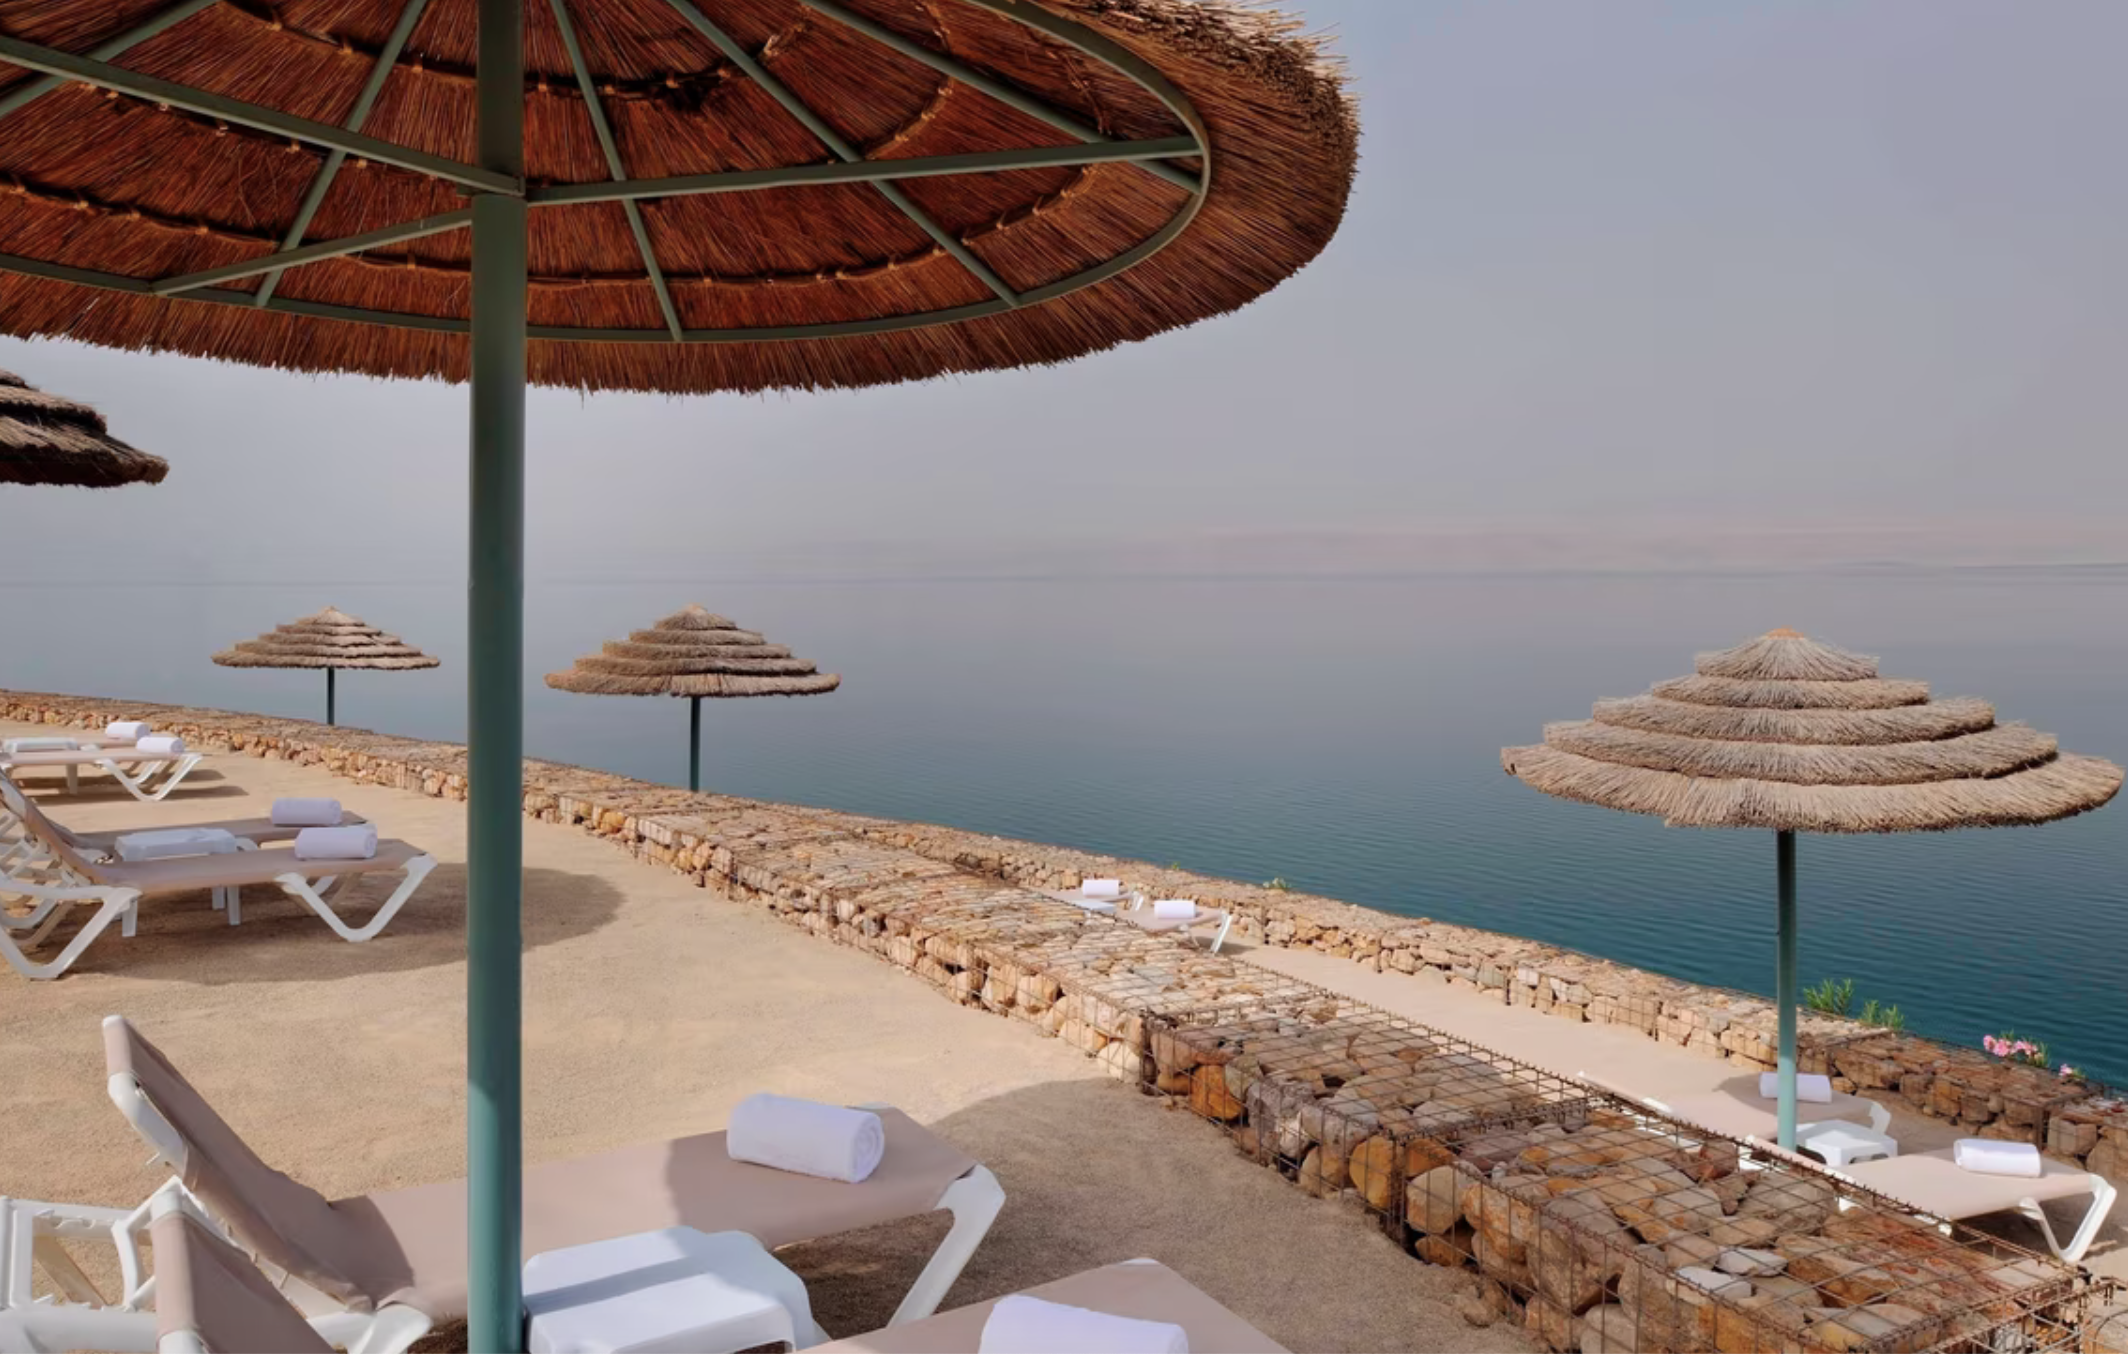 Image Credit: Marriott Dead Sea